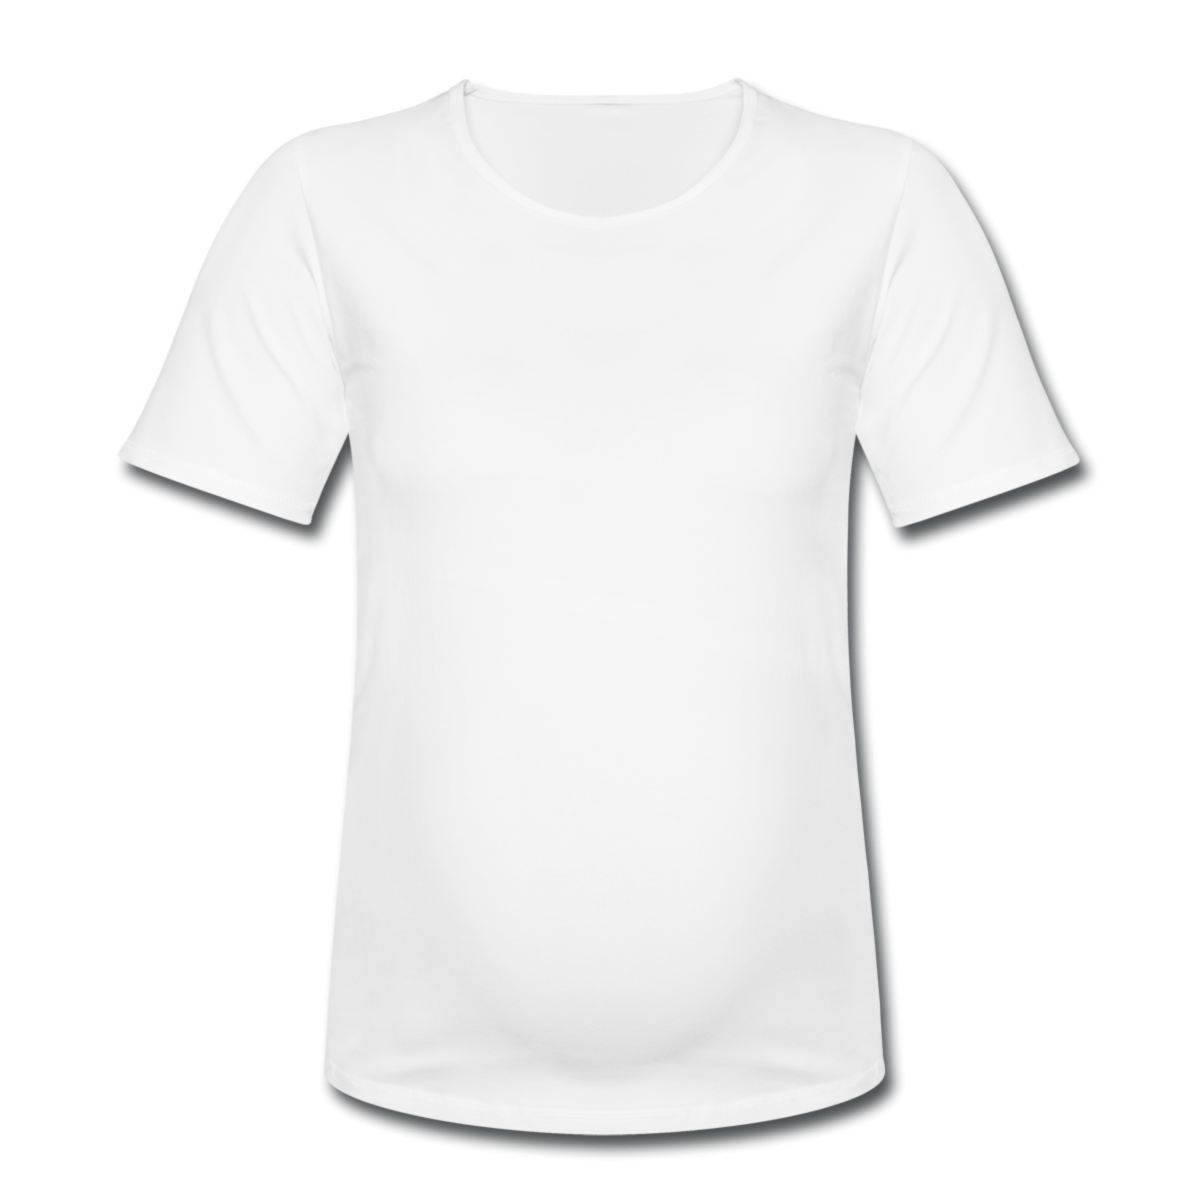 White Blank Tshirt Template